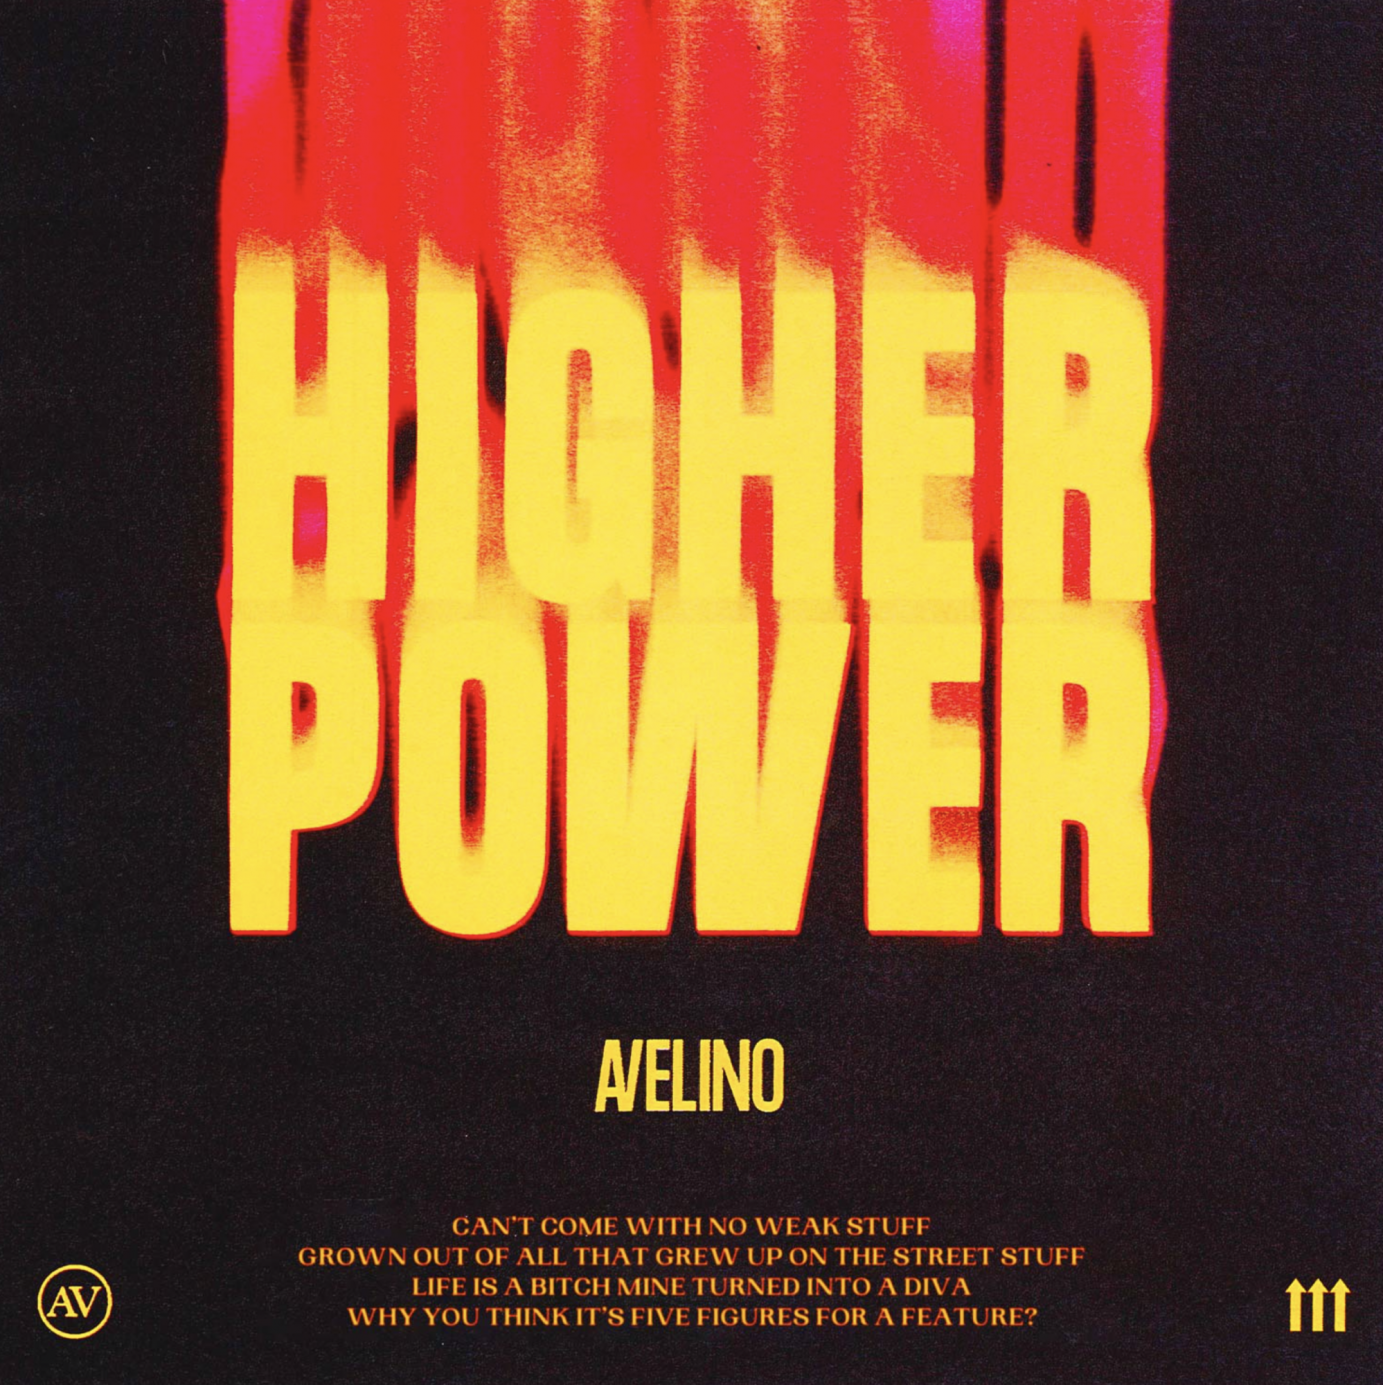 Avelino - Higher Power